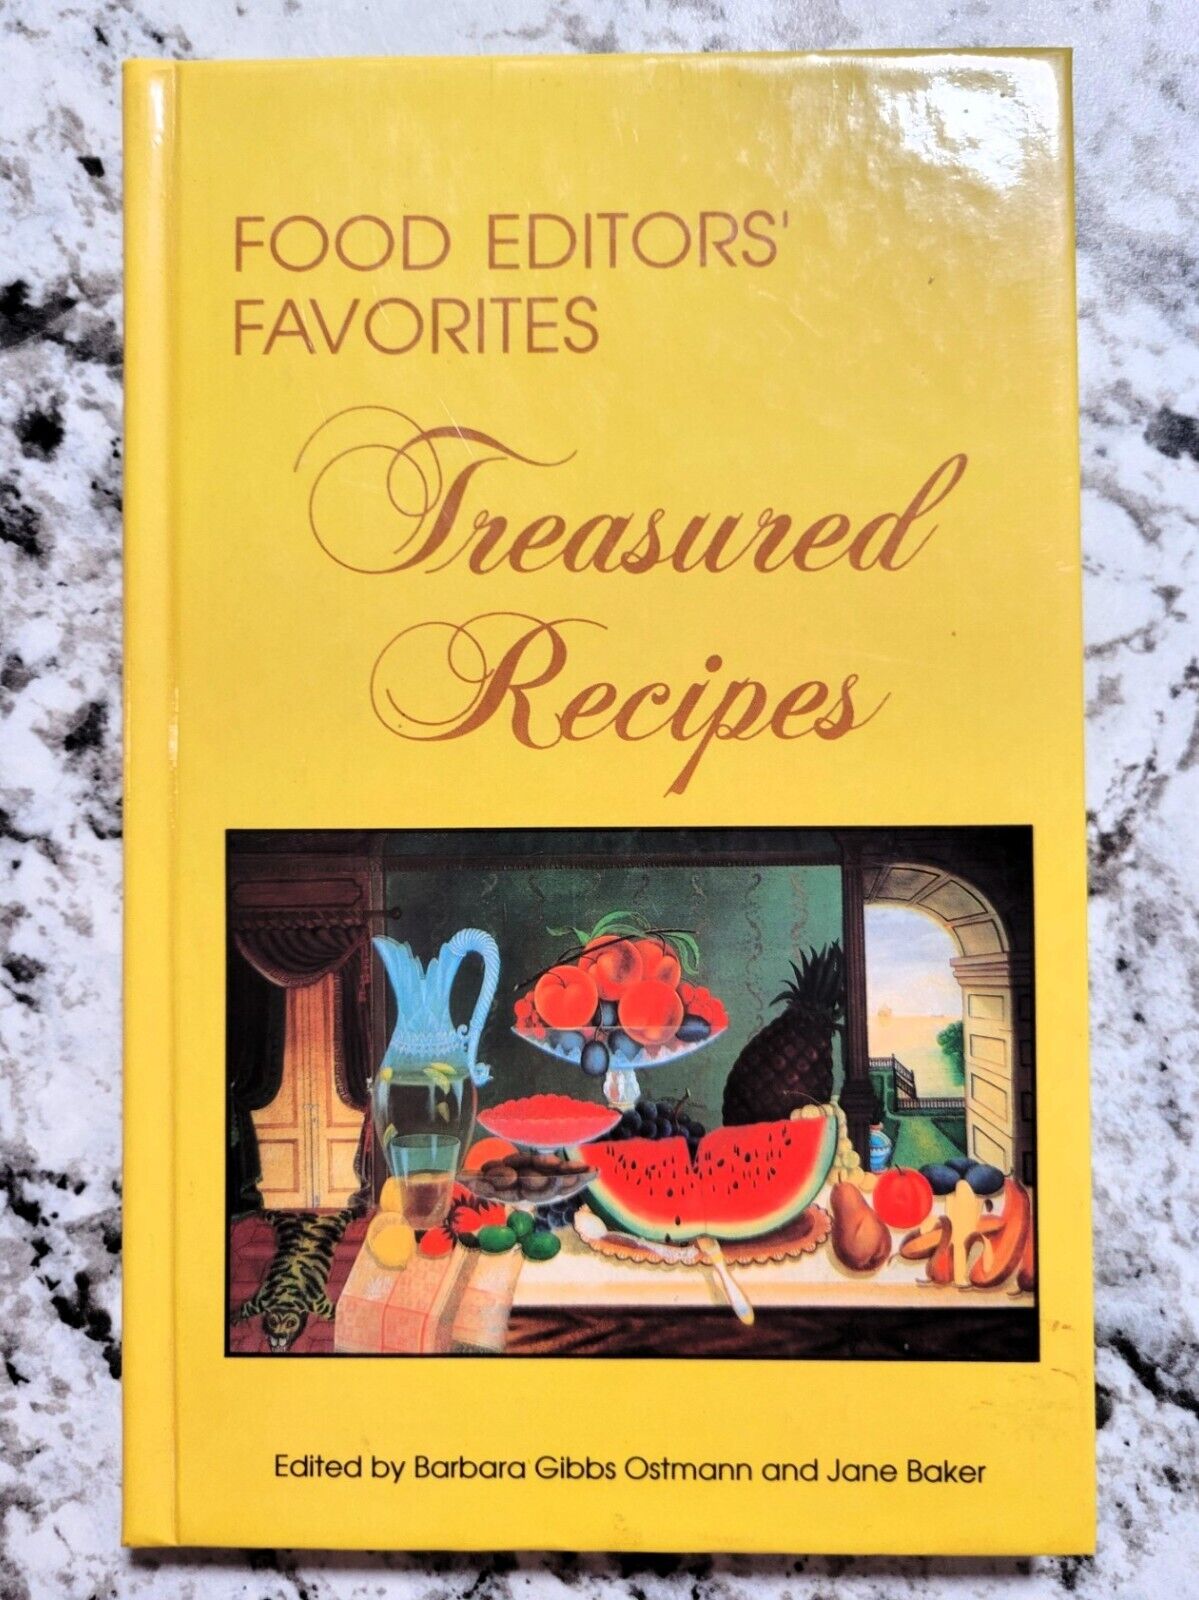 1983 Food Editors\' Favorites Treasured Recipes Cookbook Free S&H